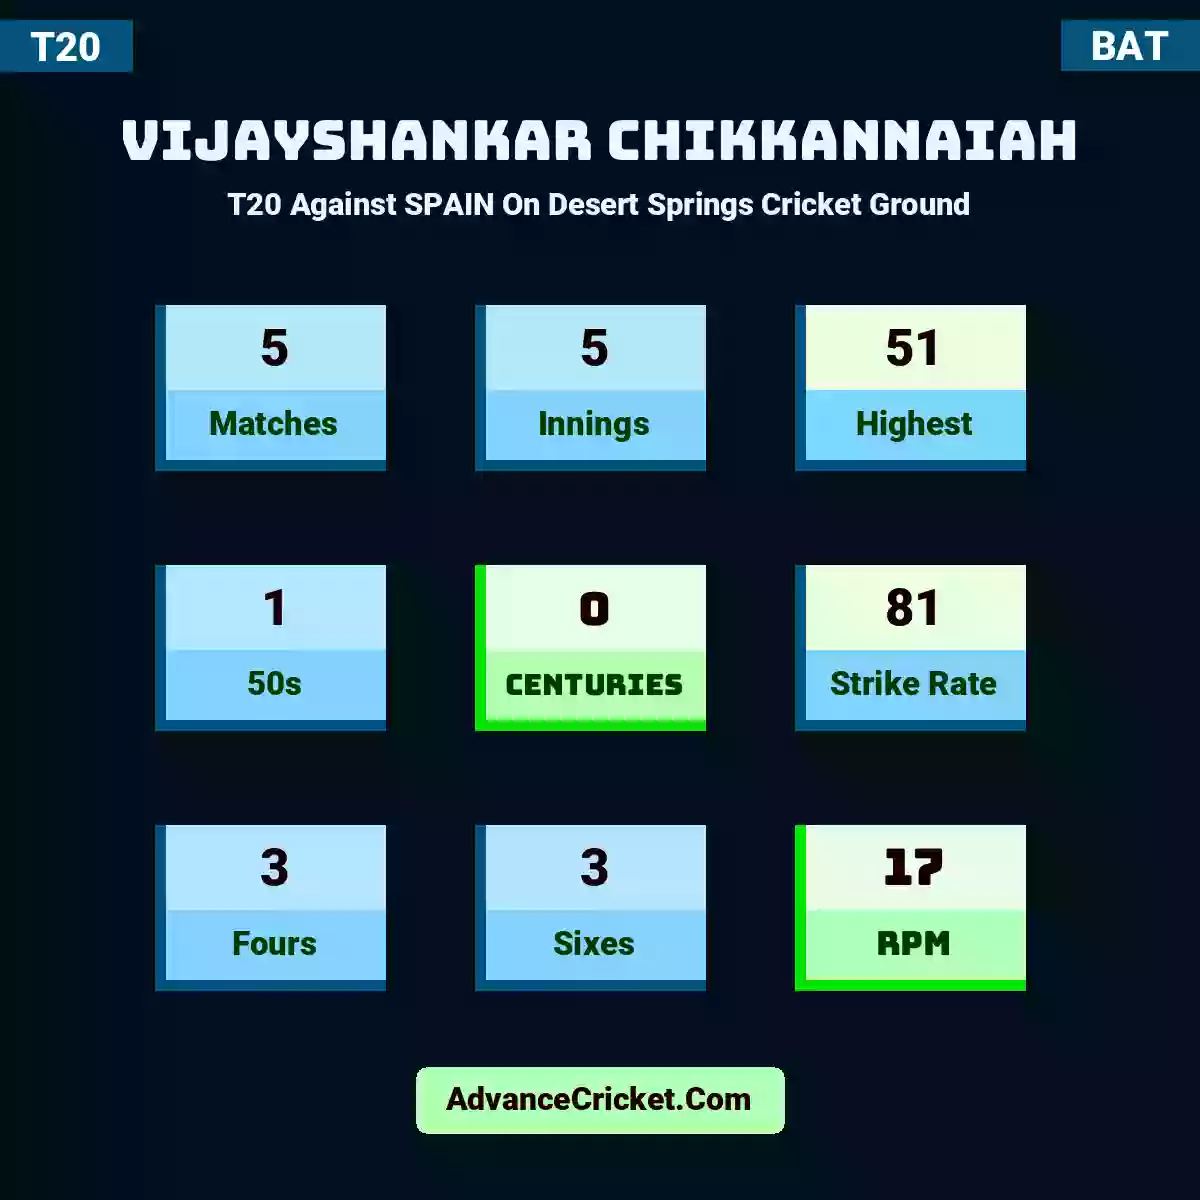 Vijayshankar Chikkannaiah T20  Against SPAIN On Desert Springs Cricket Ground, Vijayshankar Chikkannaiah played 5 matches, scored 51 runs as highest, 1 half-centuries, and 0 centuries, with a strike rate of 81. V.Chikkannaiah hit 3 fours and 3 sixes, with an RPM of 17.